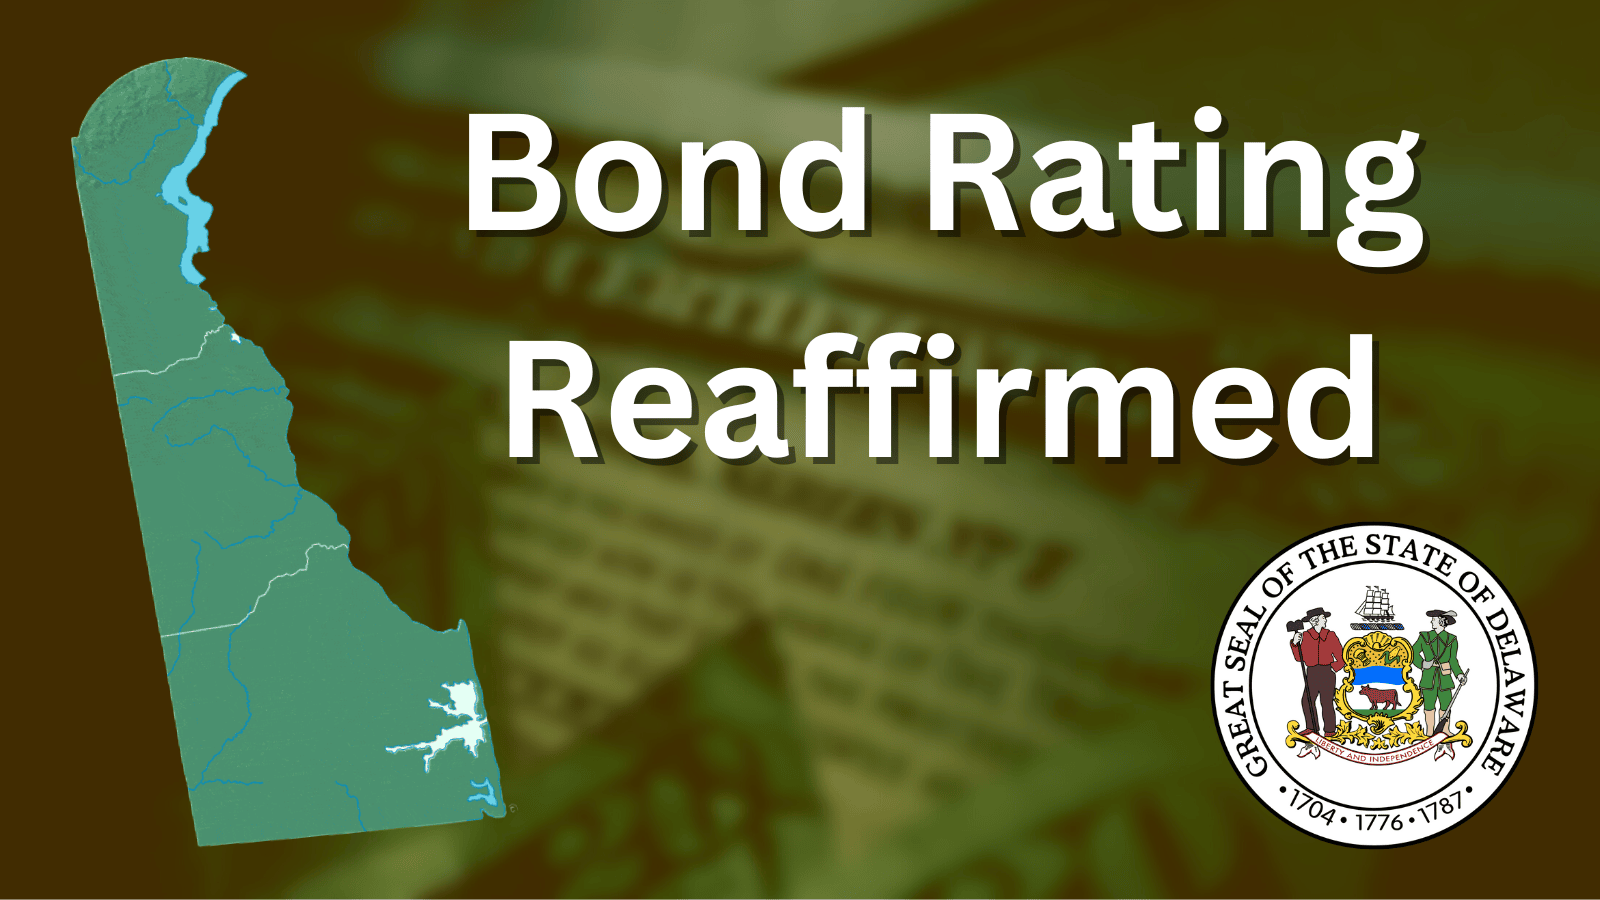 Delaware bond rating reaffirmed